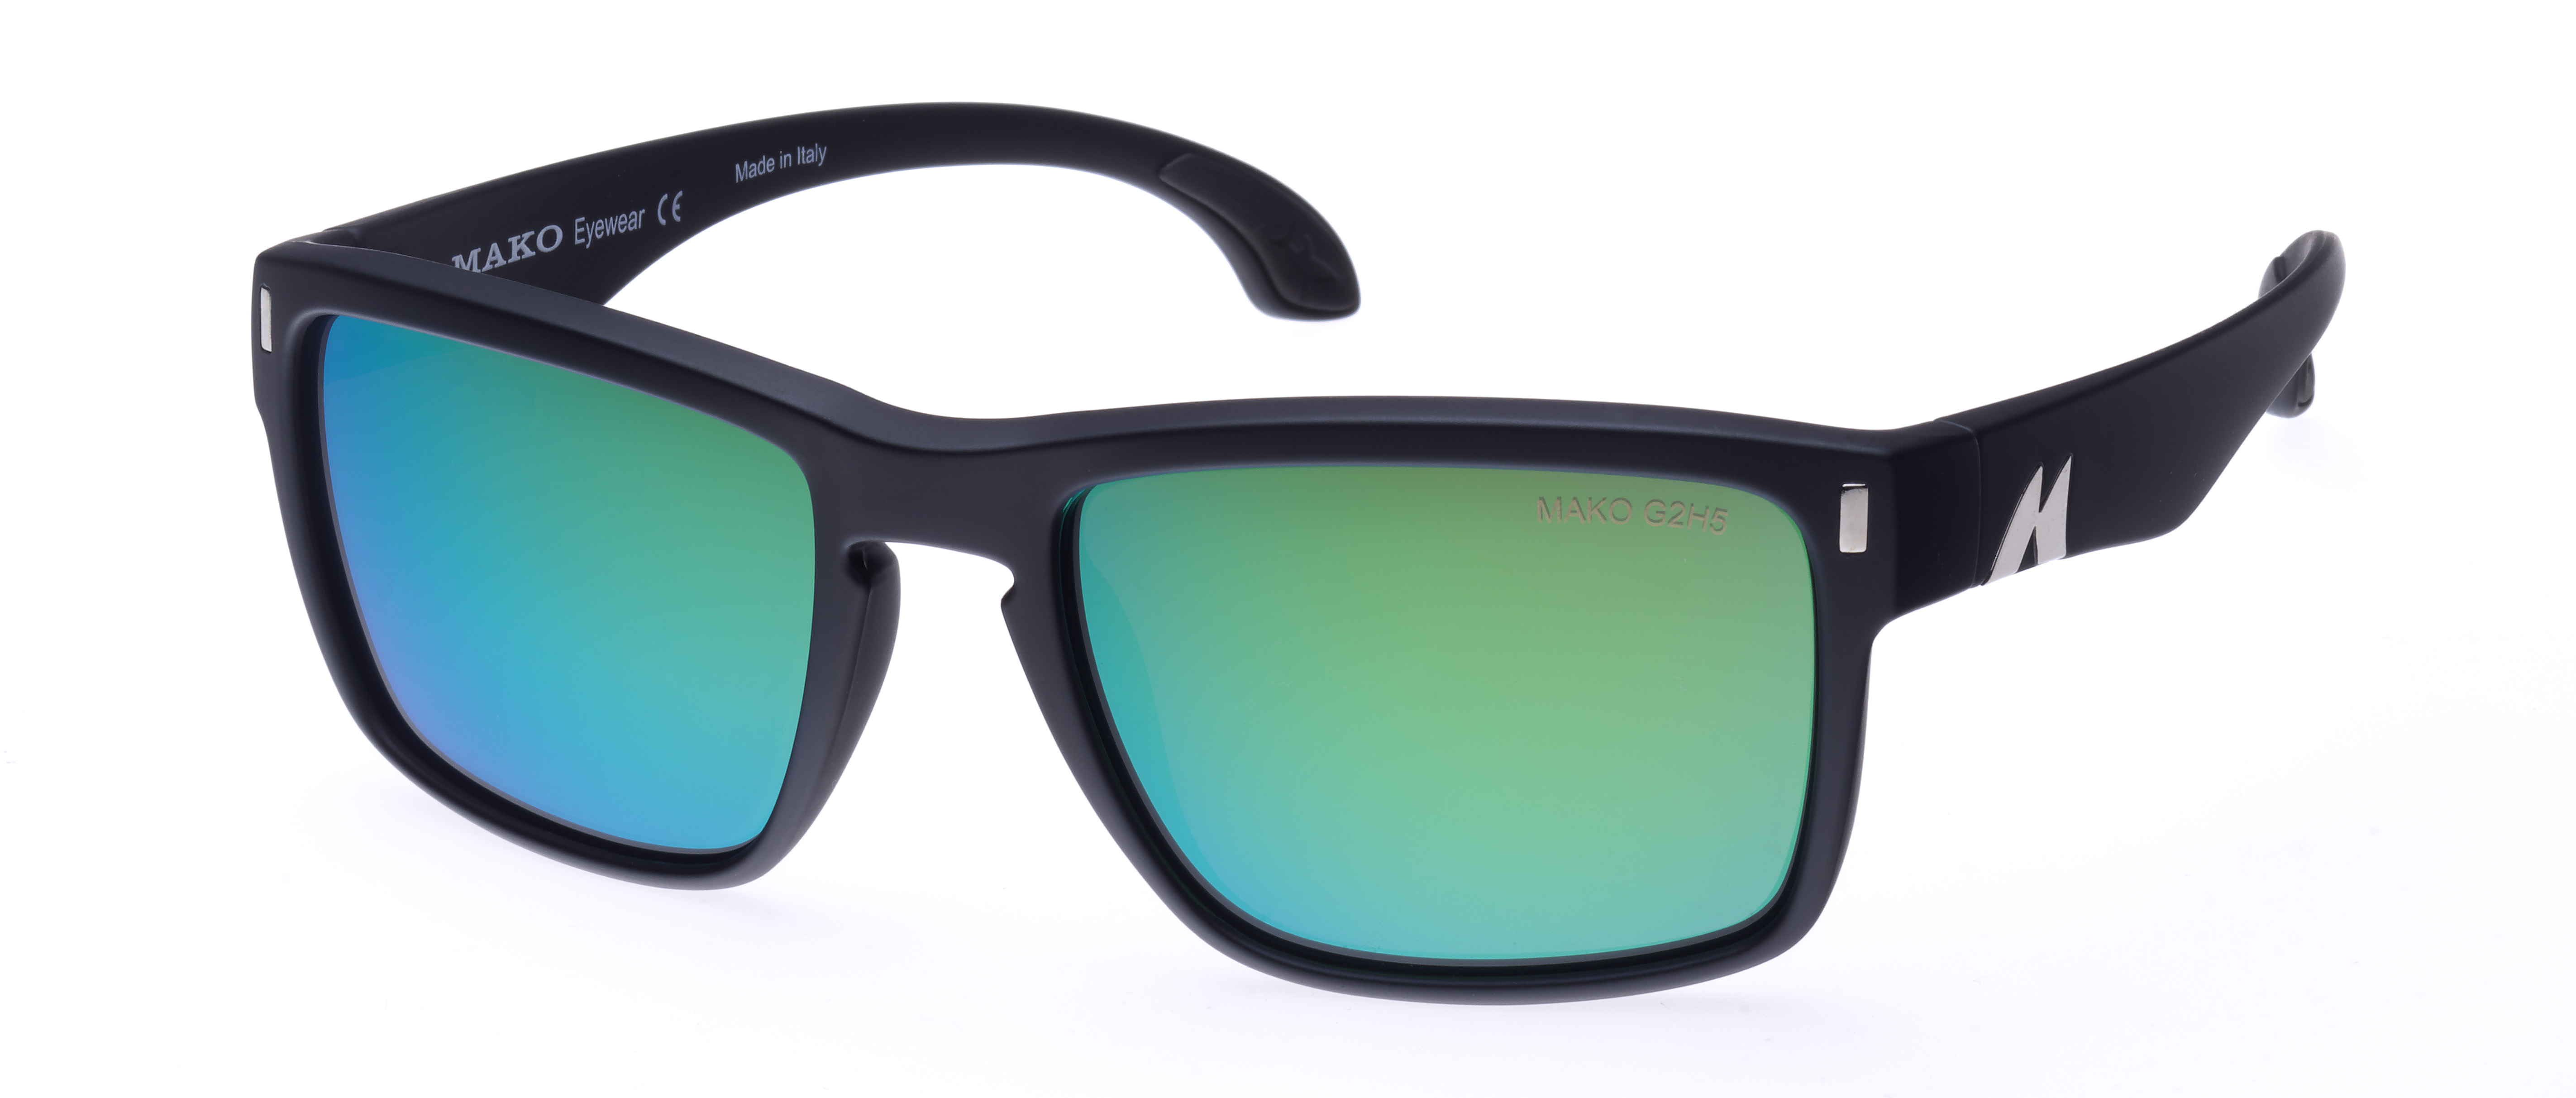 Mako GT Grey Glass Sunglasses Polarised Valued $69 FREE Mako Shirt 